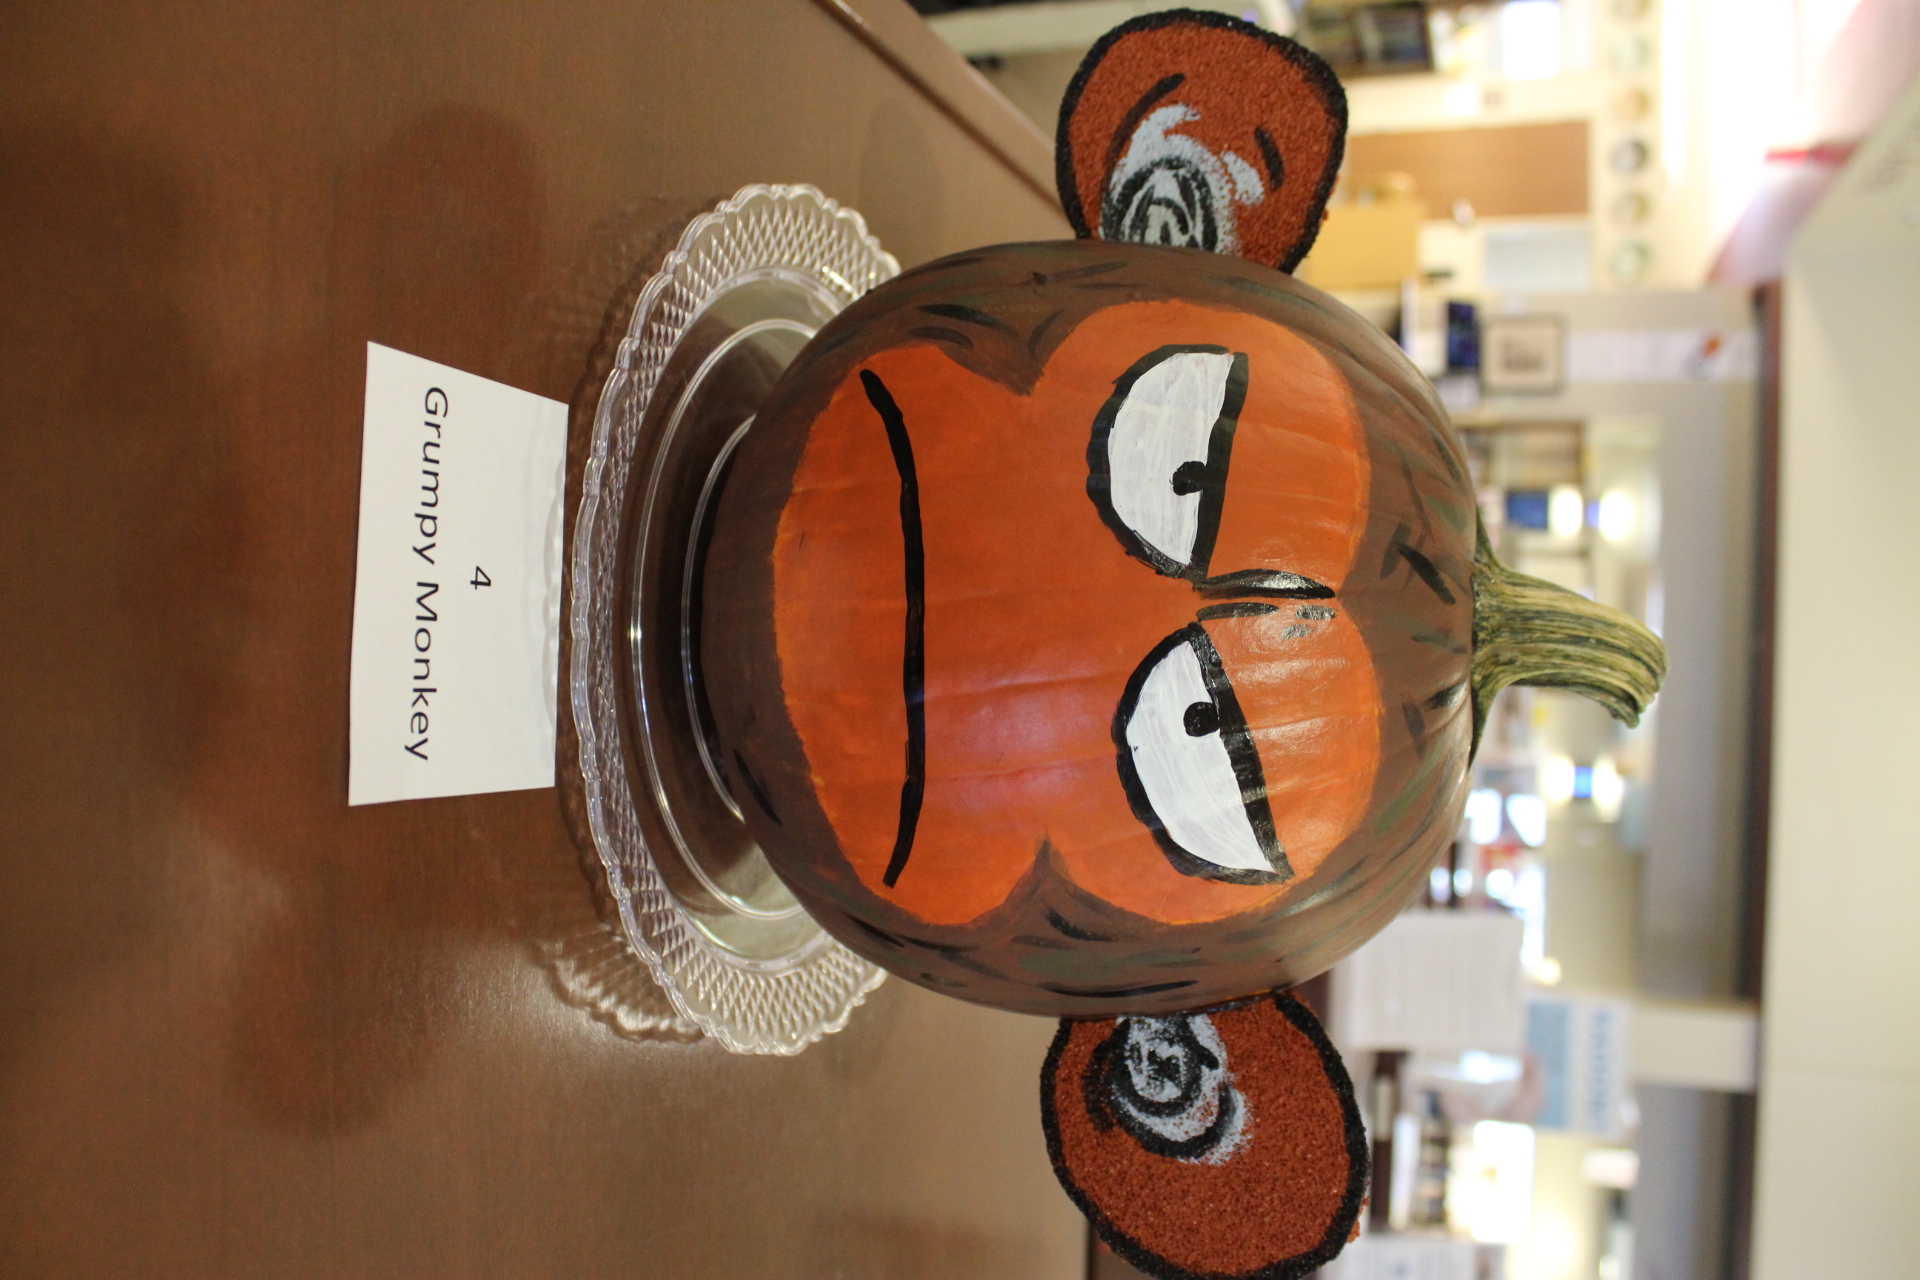 Pumpkin decorated as "Grumpy Monkey"